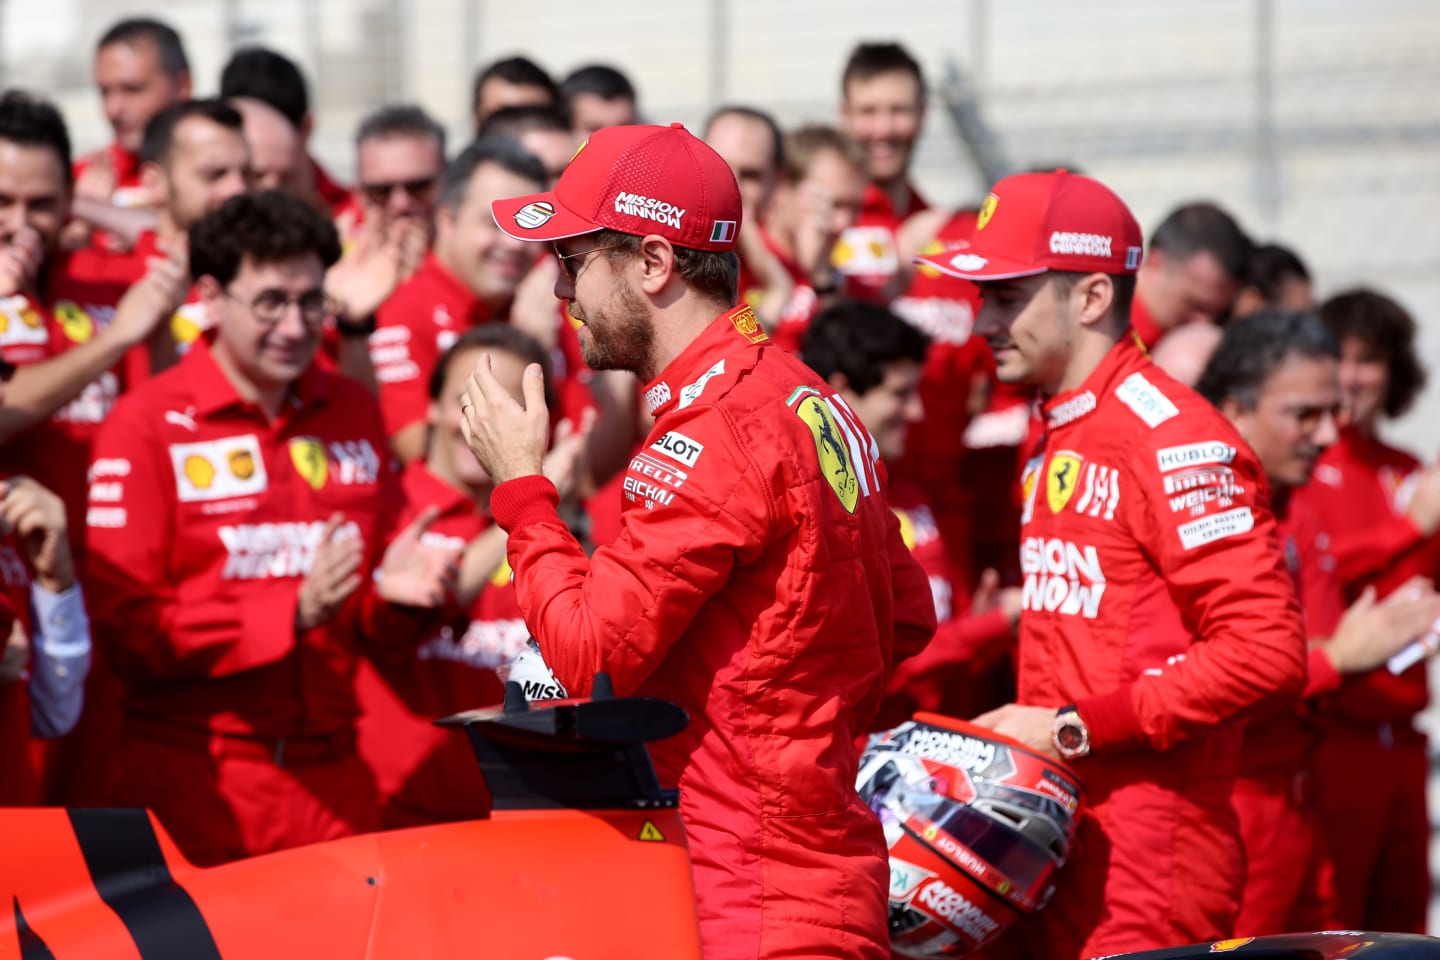 ABU DHABI, UNITED ARAB EMIRATES - NOVEMBER 30: Sebastian Vettel of Germany and Ferrari and Charles